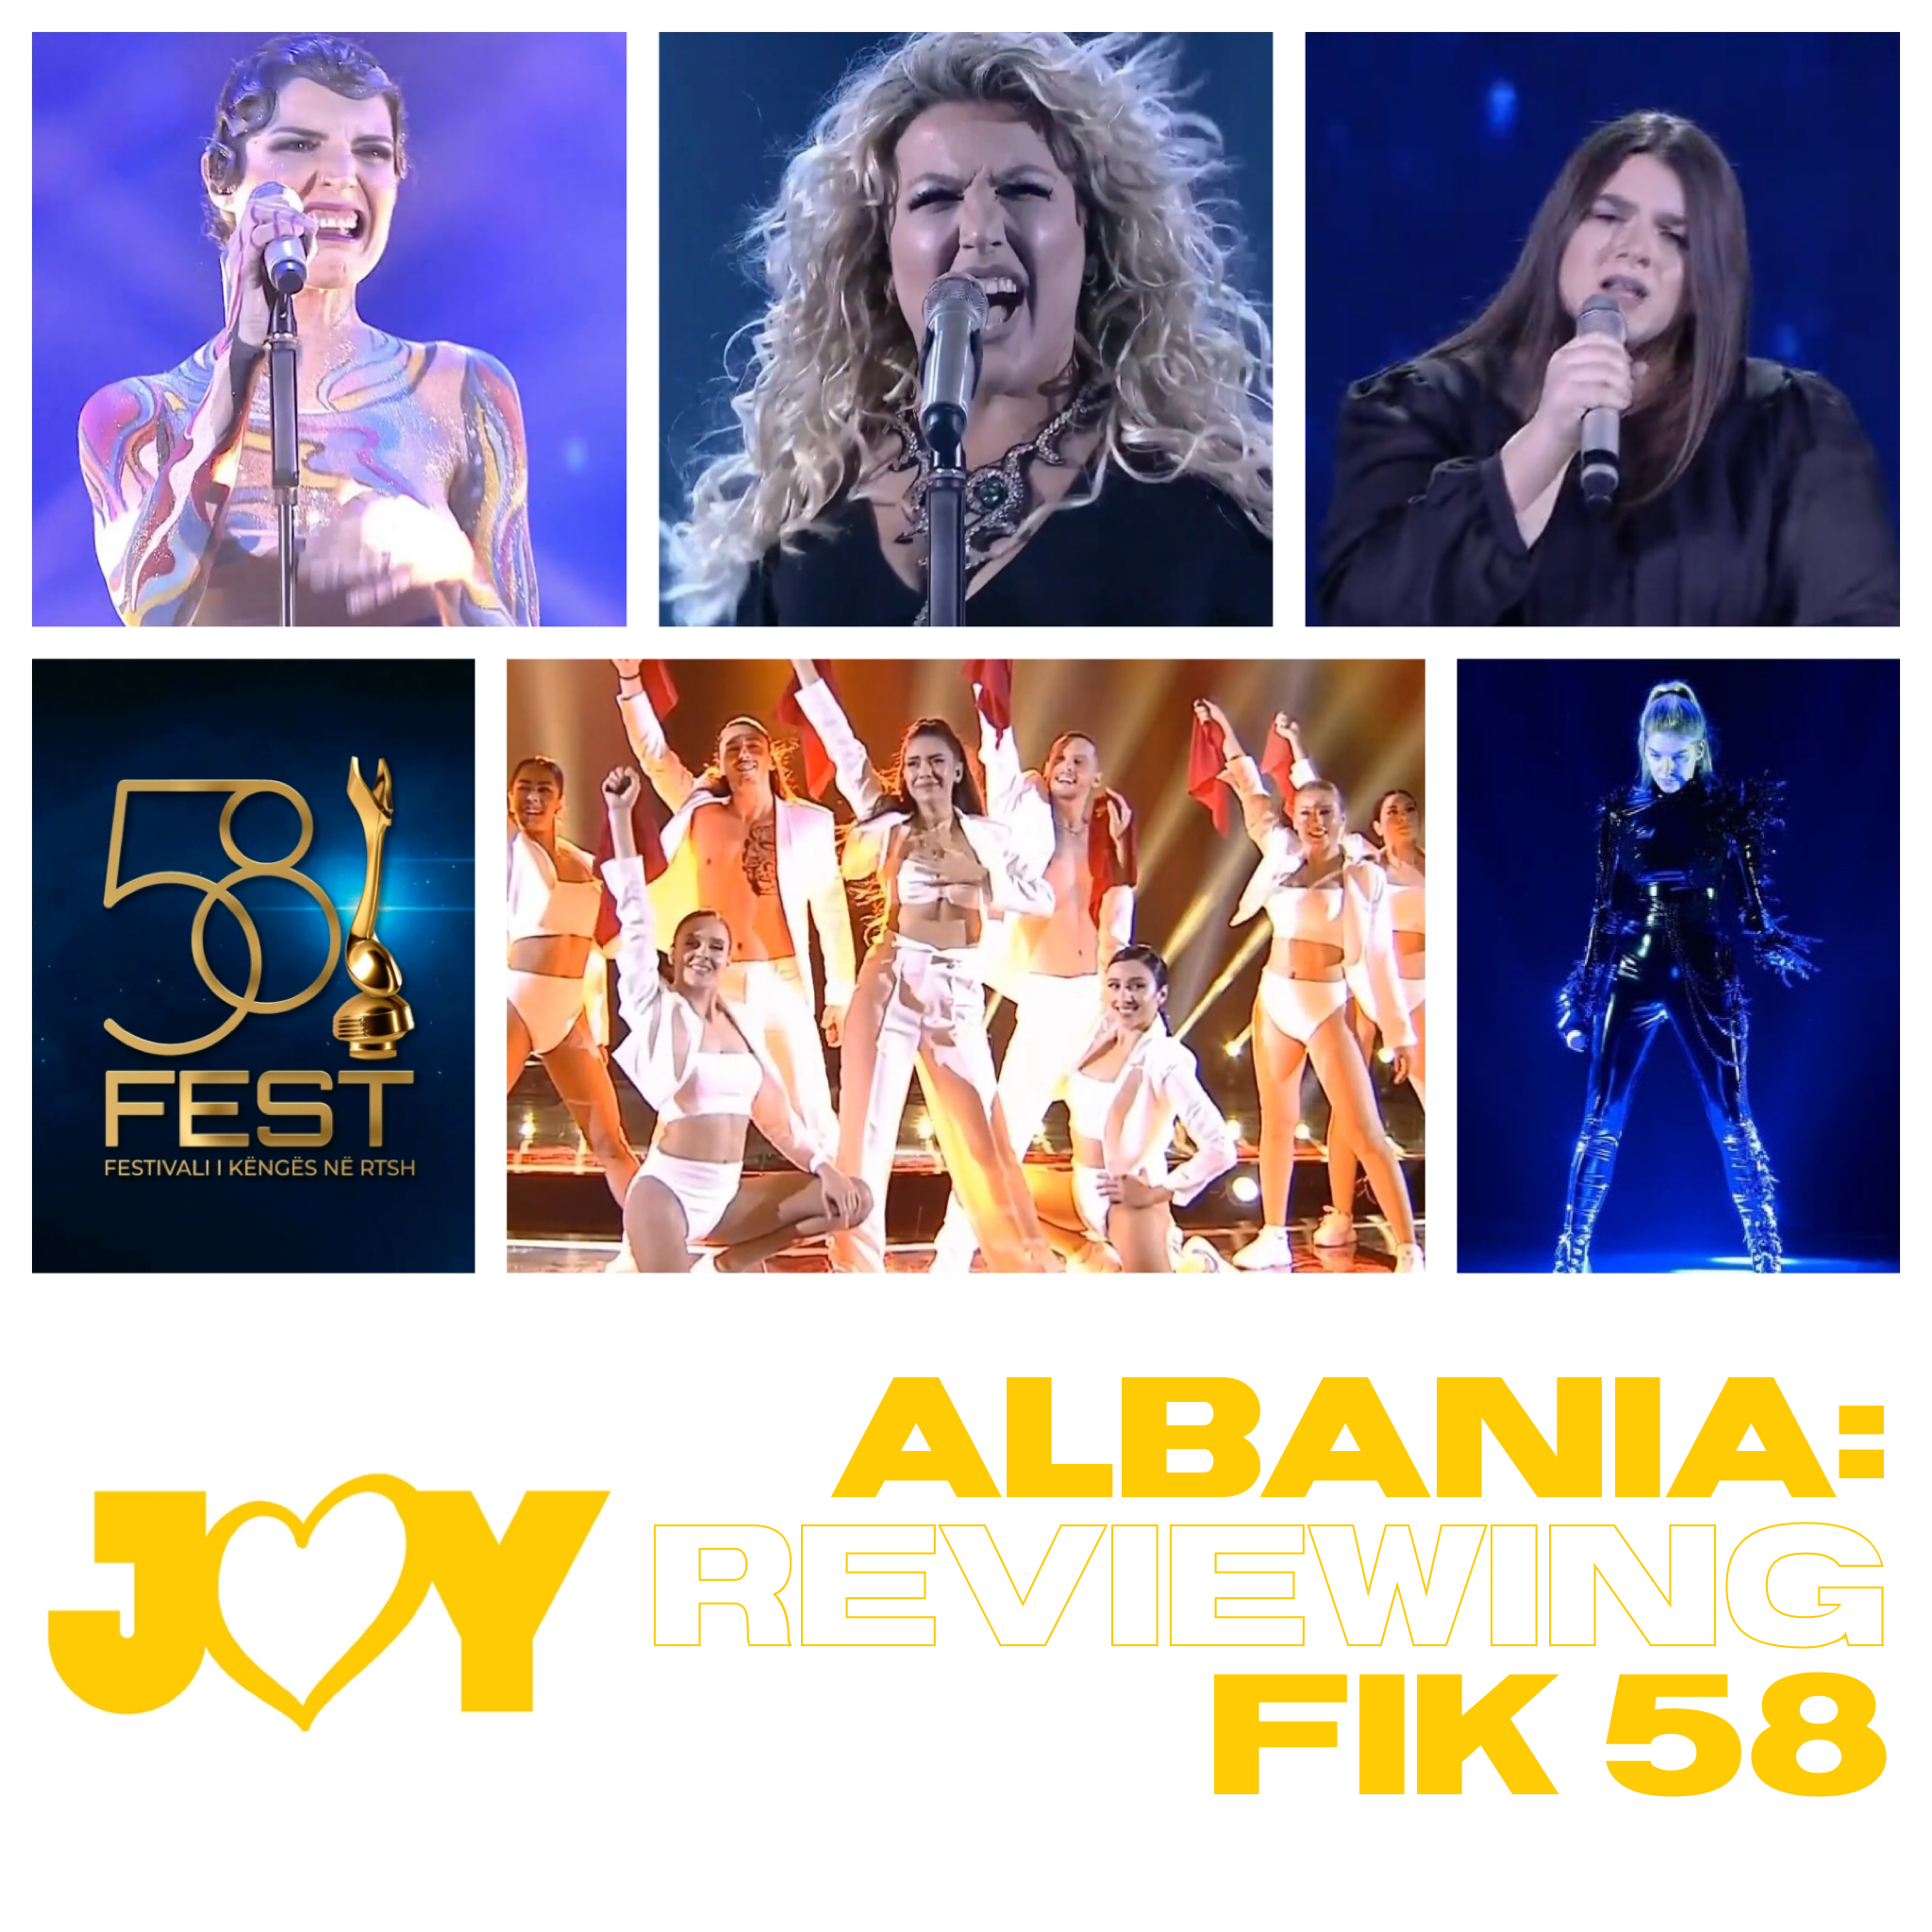 Albania’s sky is falling: Reviewing FiK 58